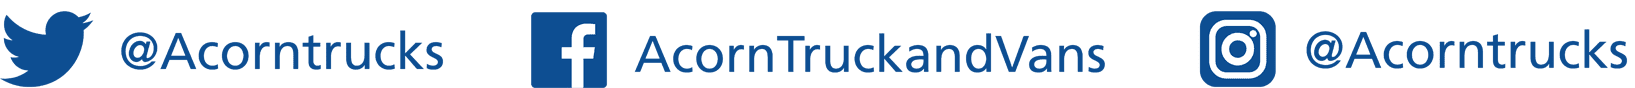 Acorn Trucks are on more Social Network Platforms